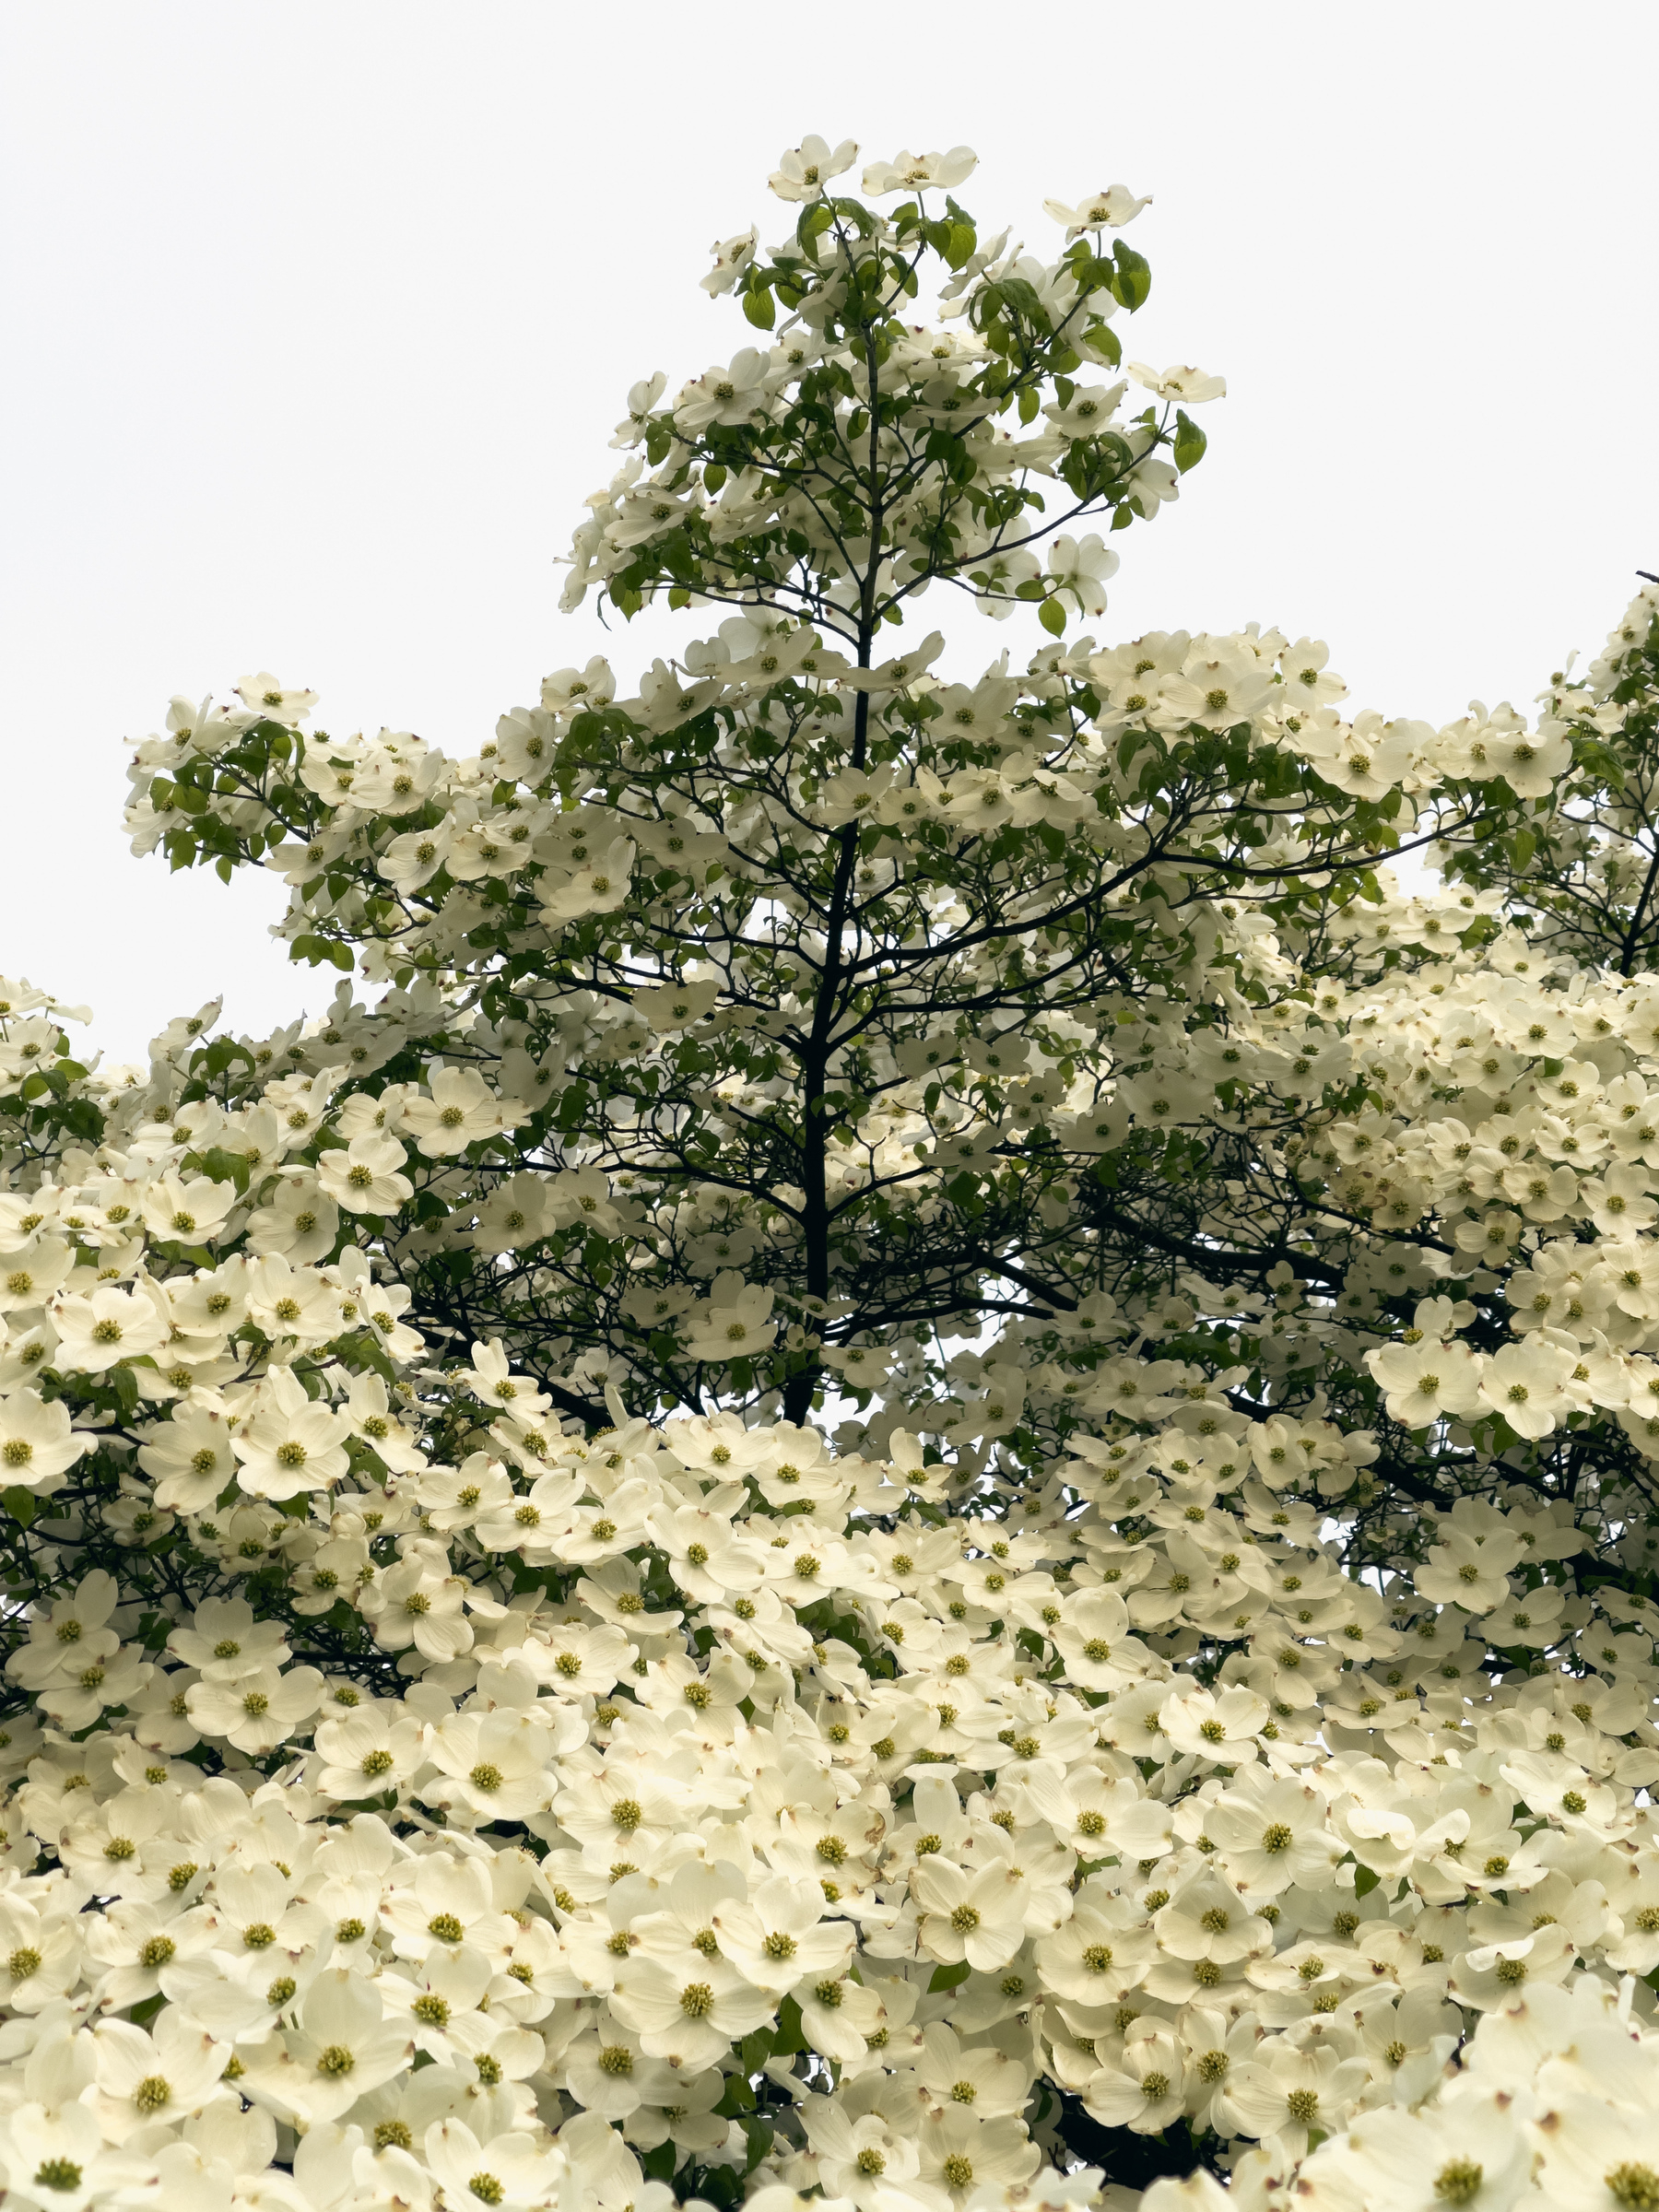 Dogwood tree in full bloom.